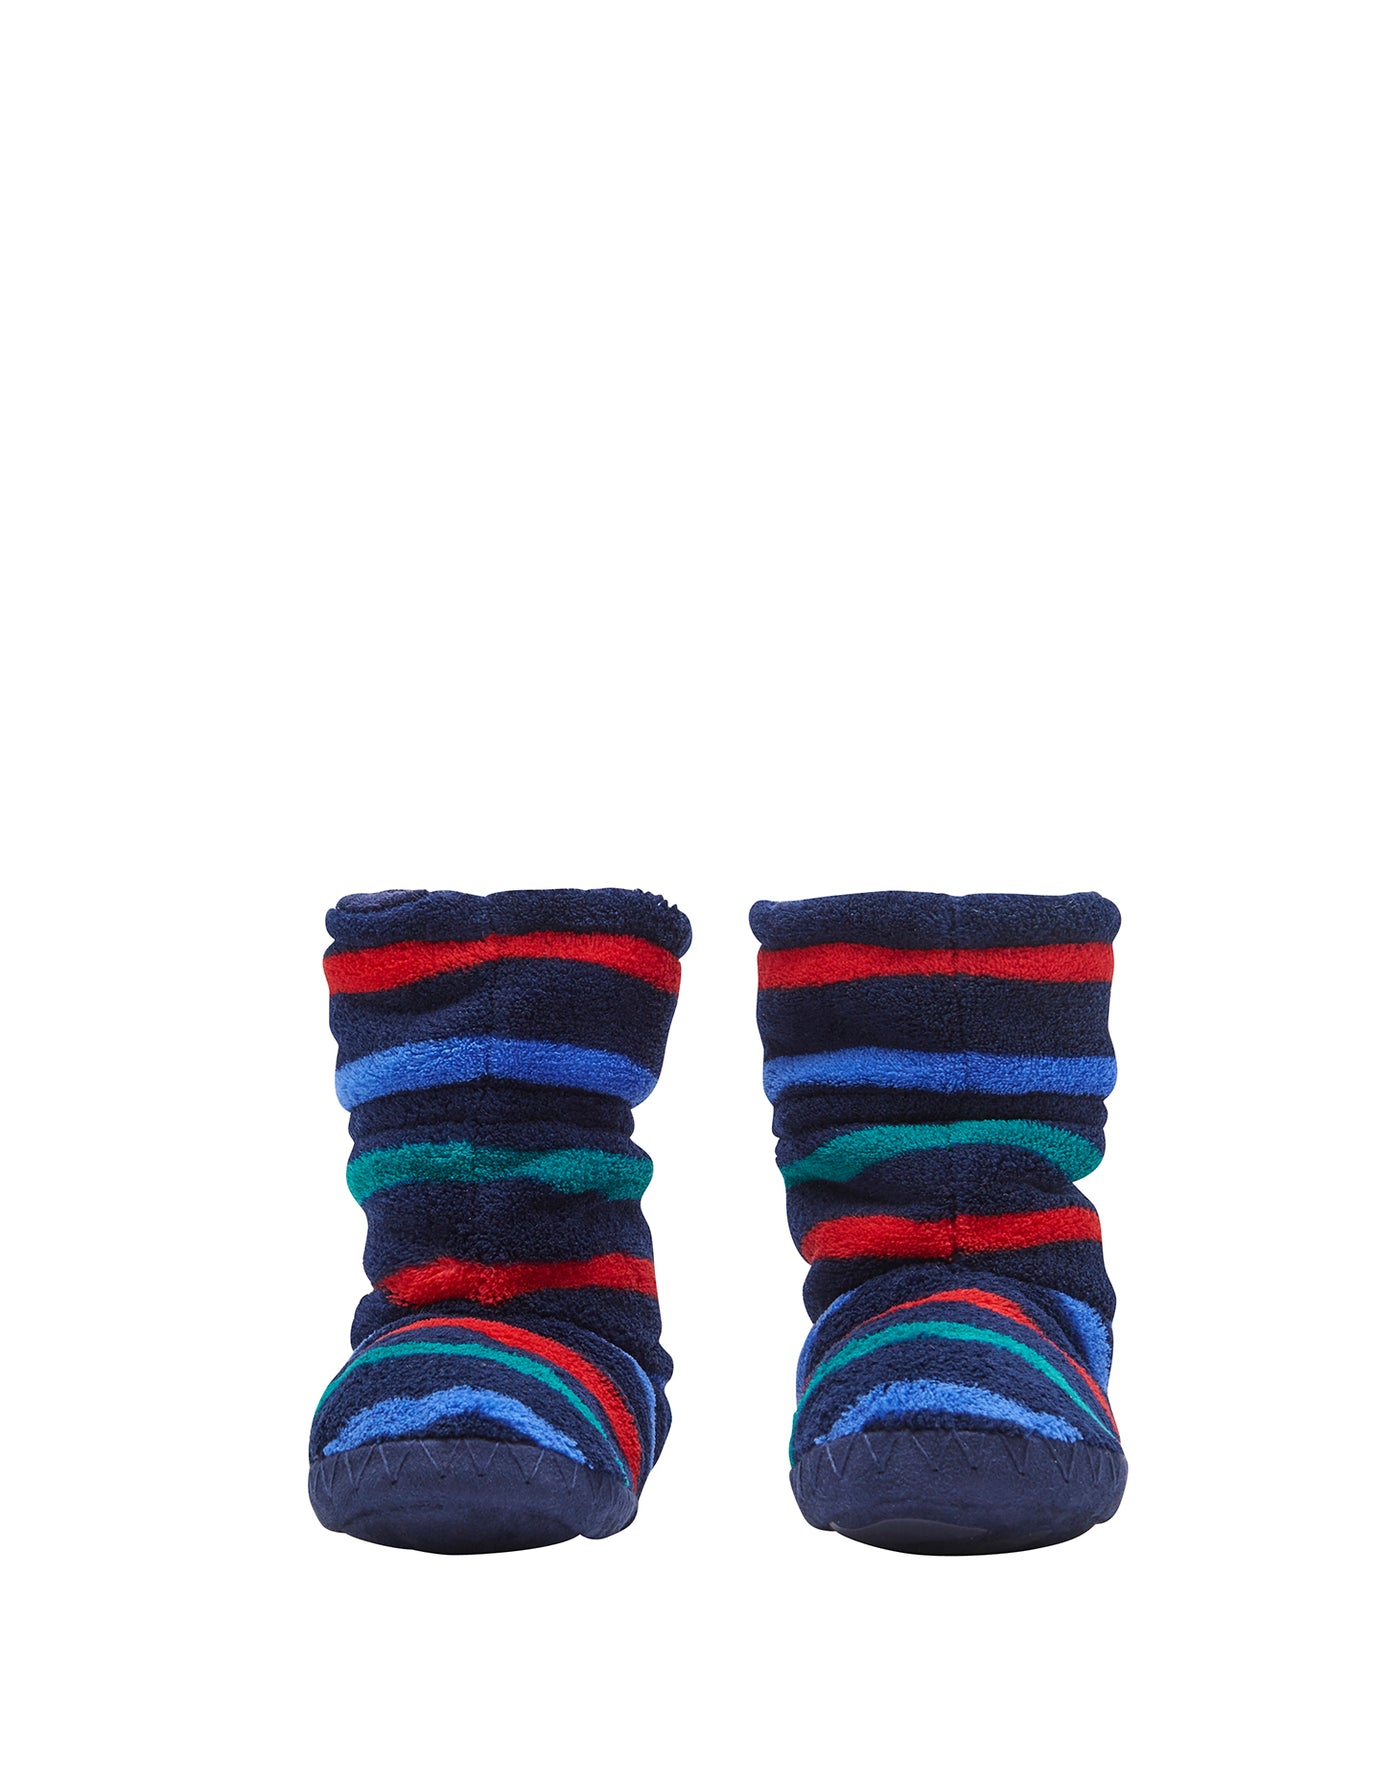 Joules Fleece Lined Slipper Socks - Multi Stripe